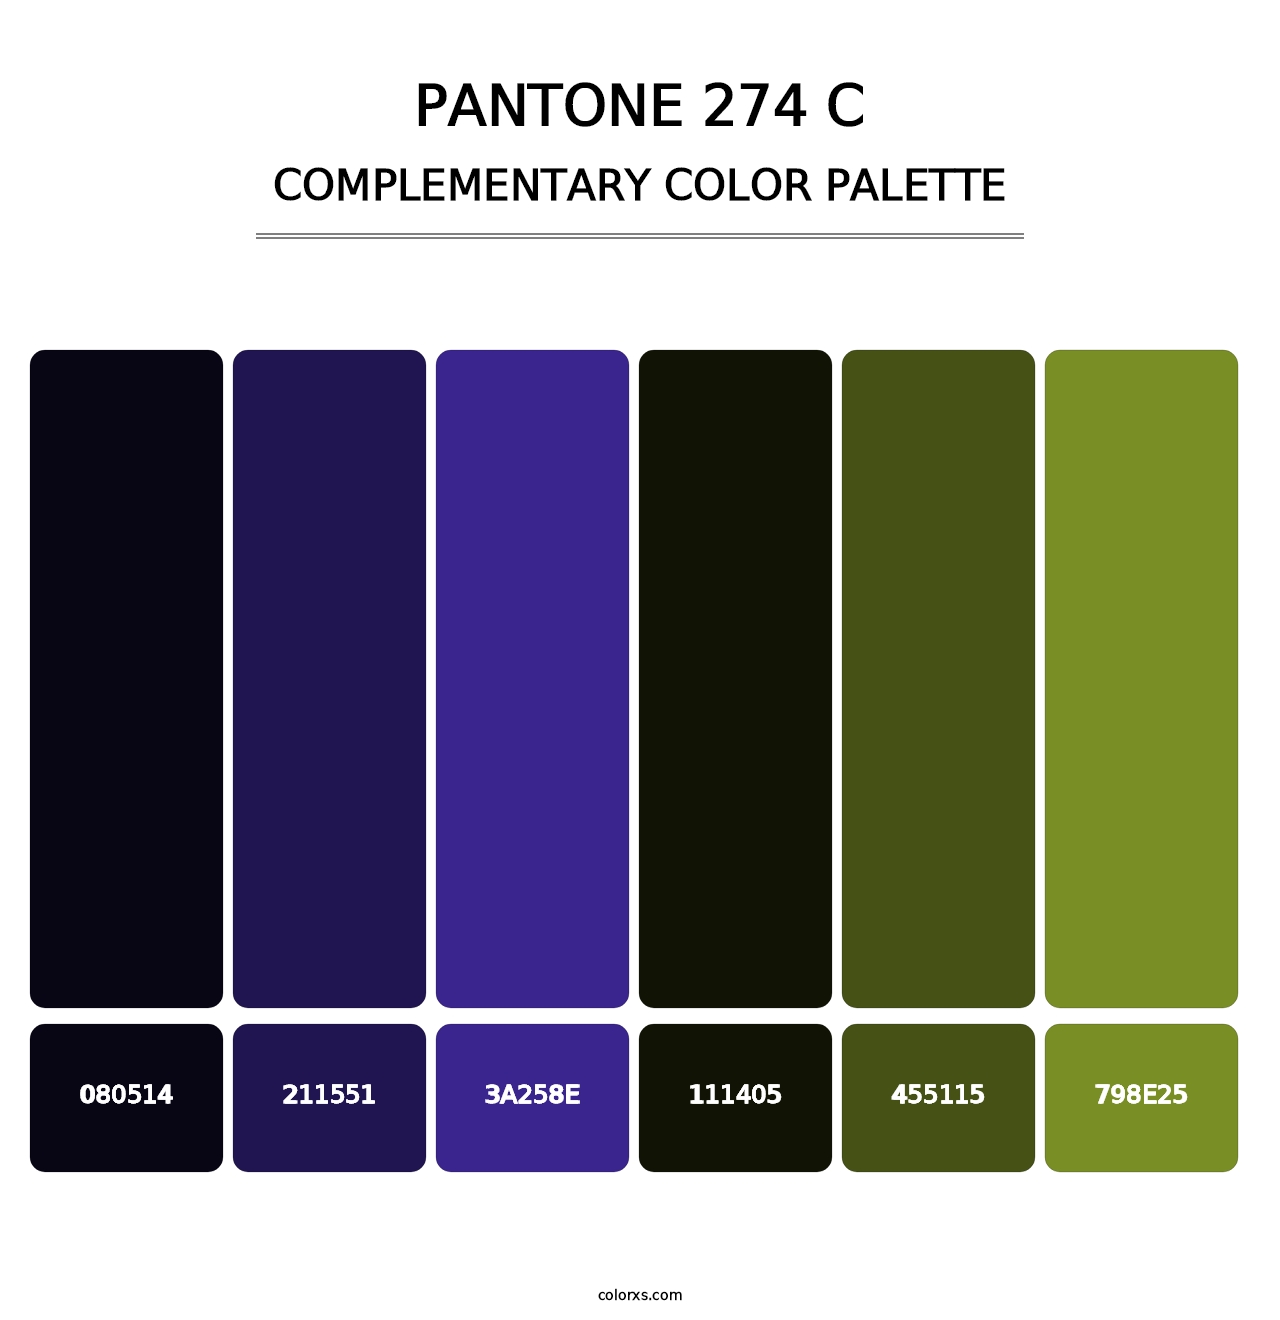 PANTONE 274 C - Complementary Color Palette